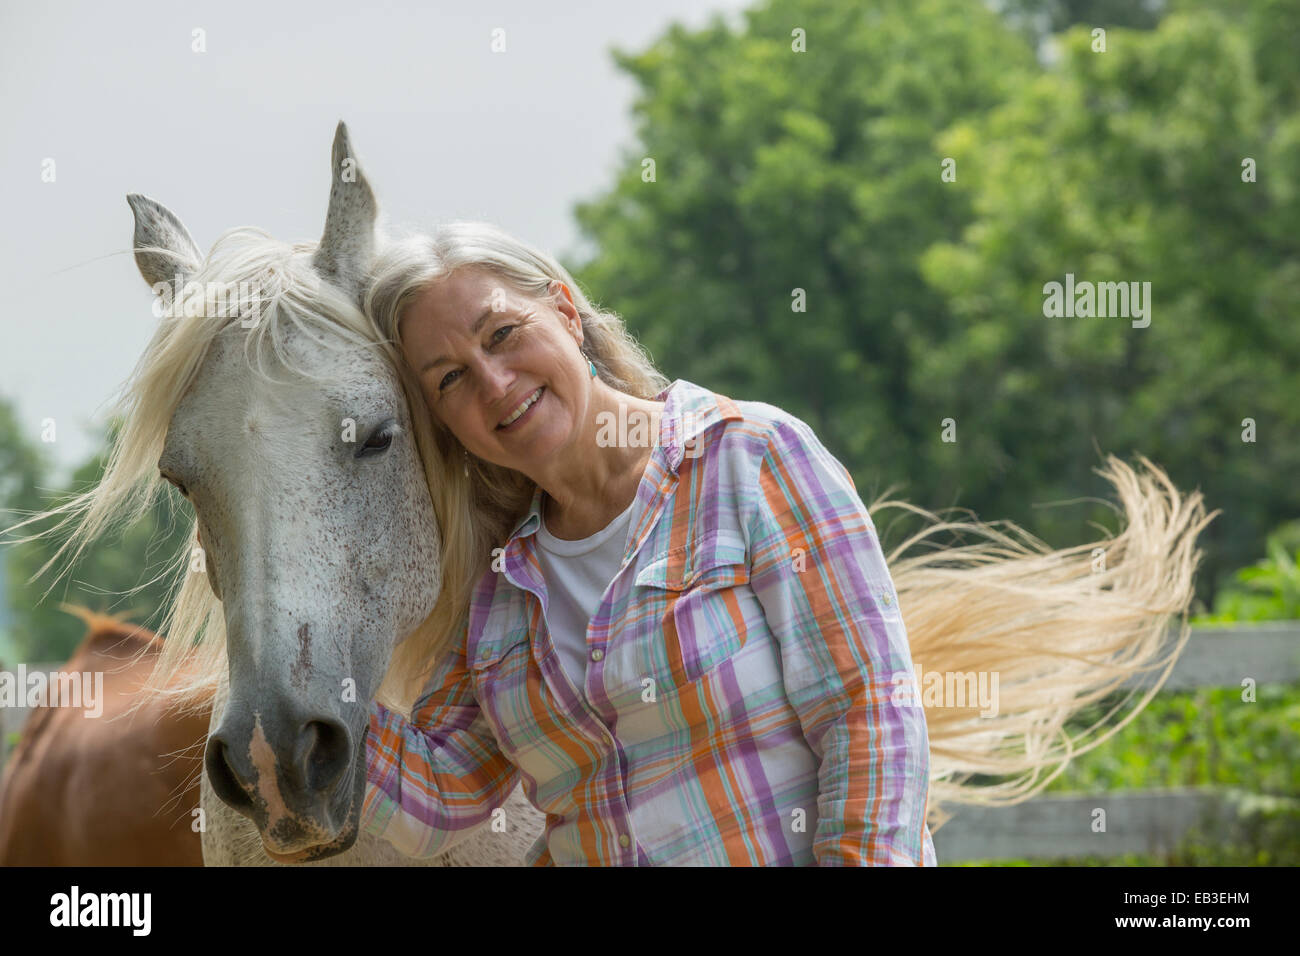 Older Caucasian woman petting horse outdoors Stock Photo